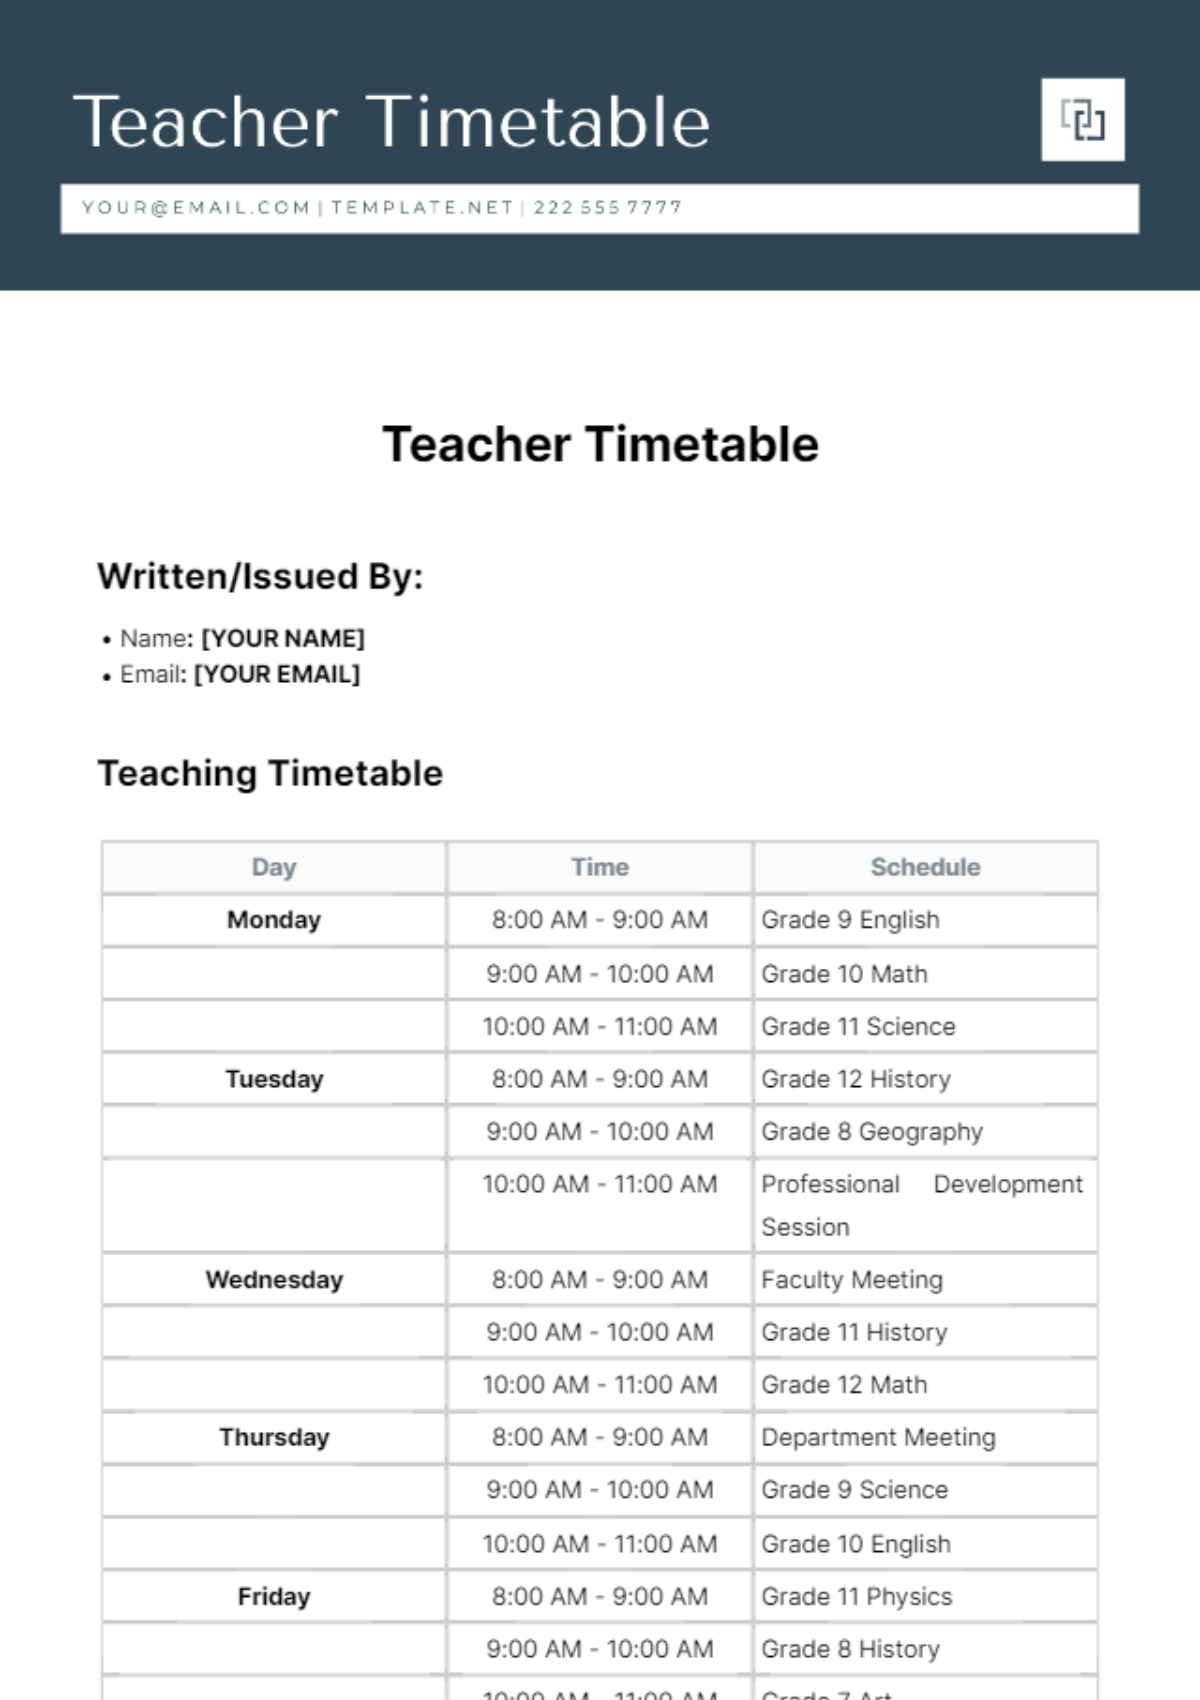 Free Teacher Timetable Template